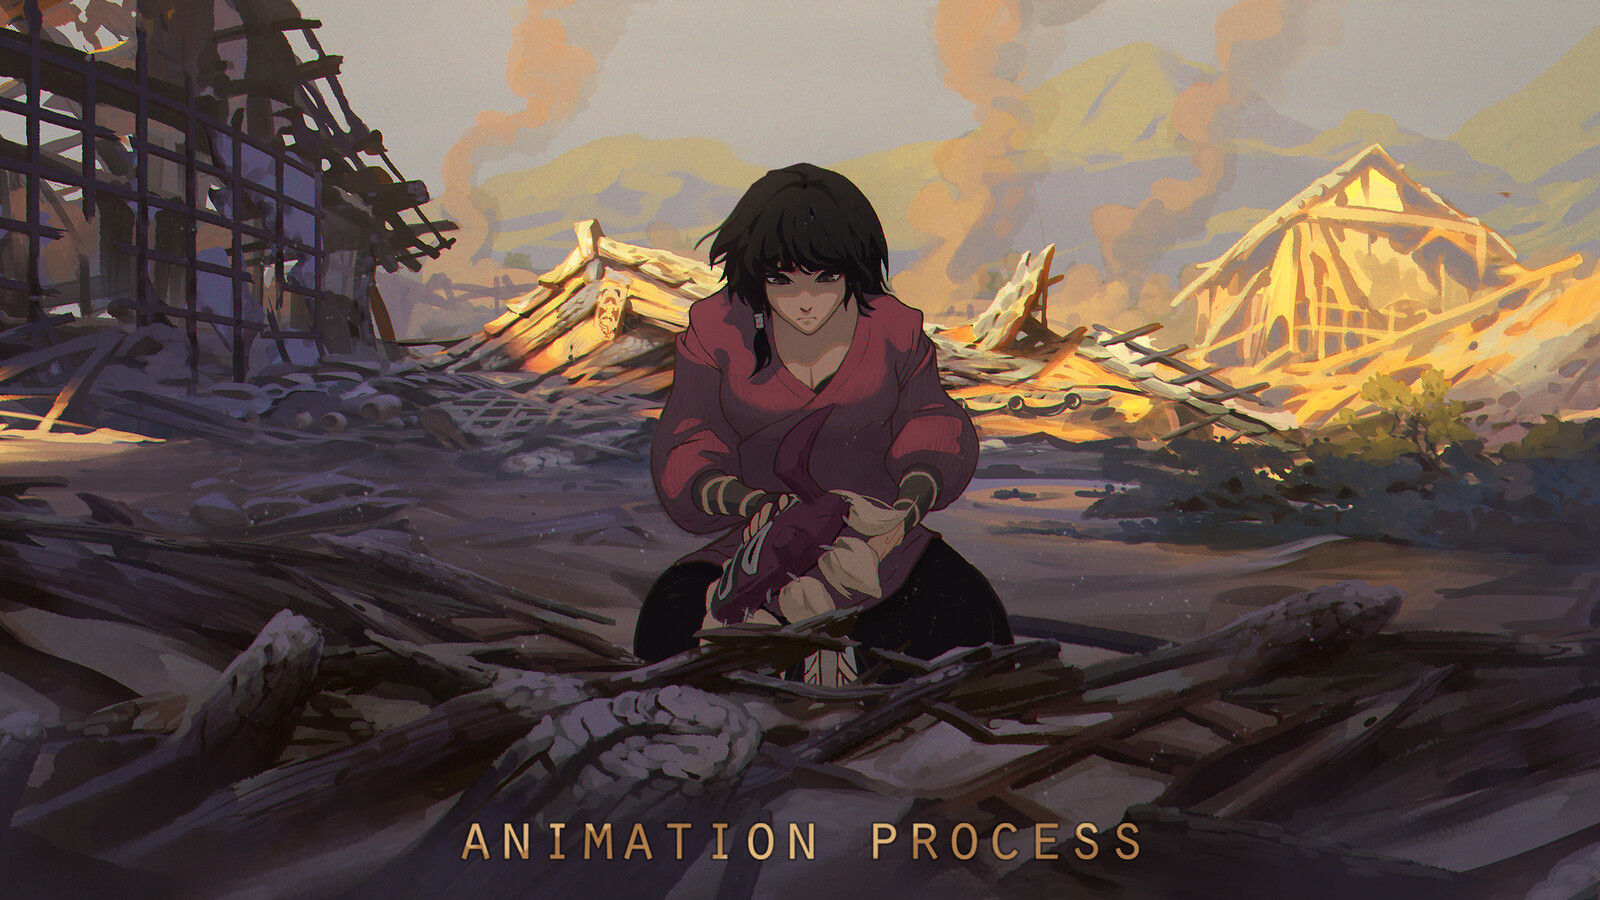 Mineko: Animation process